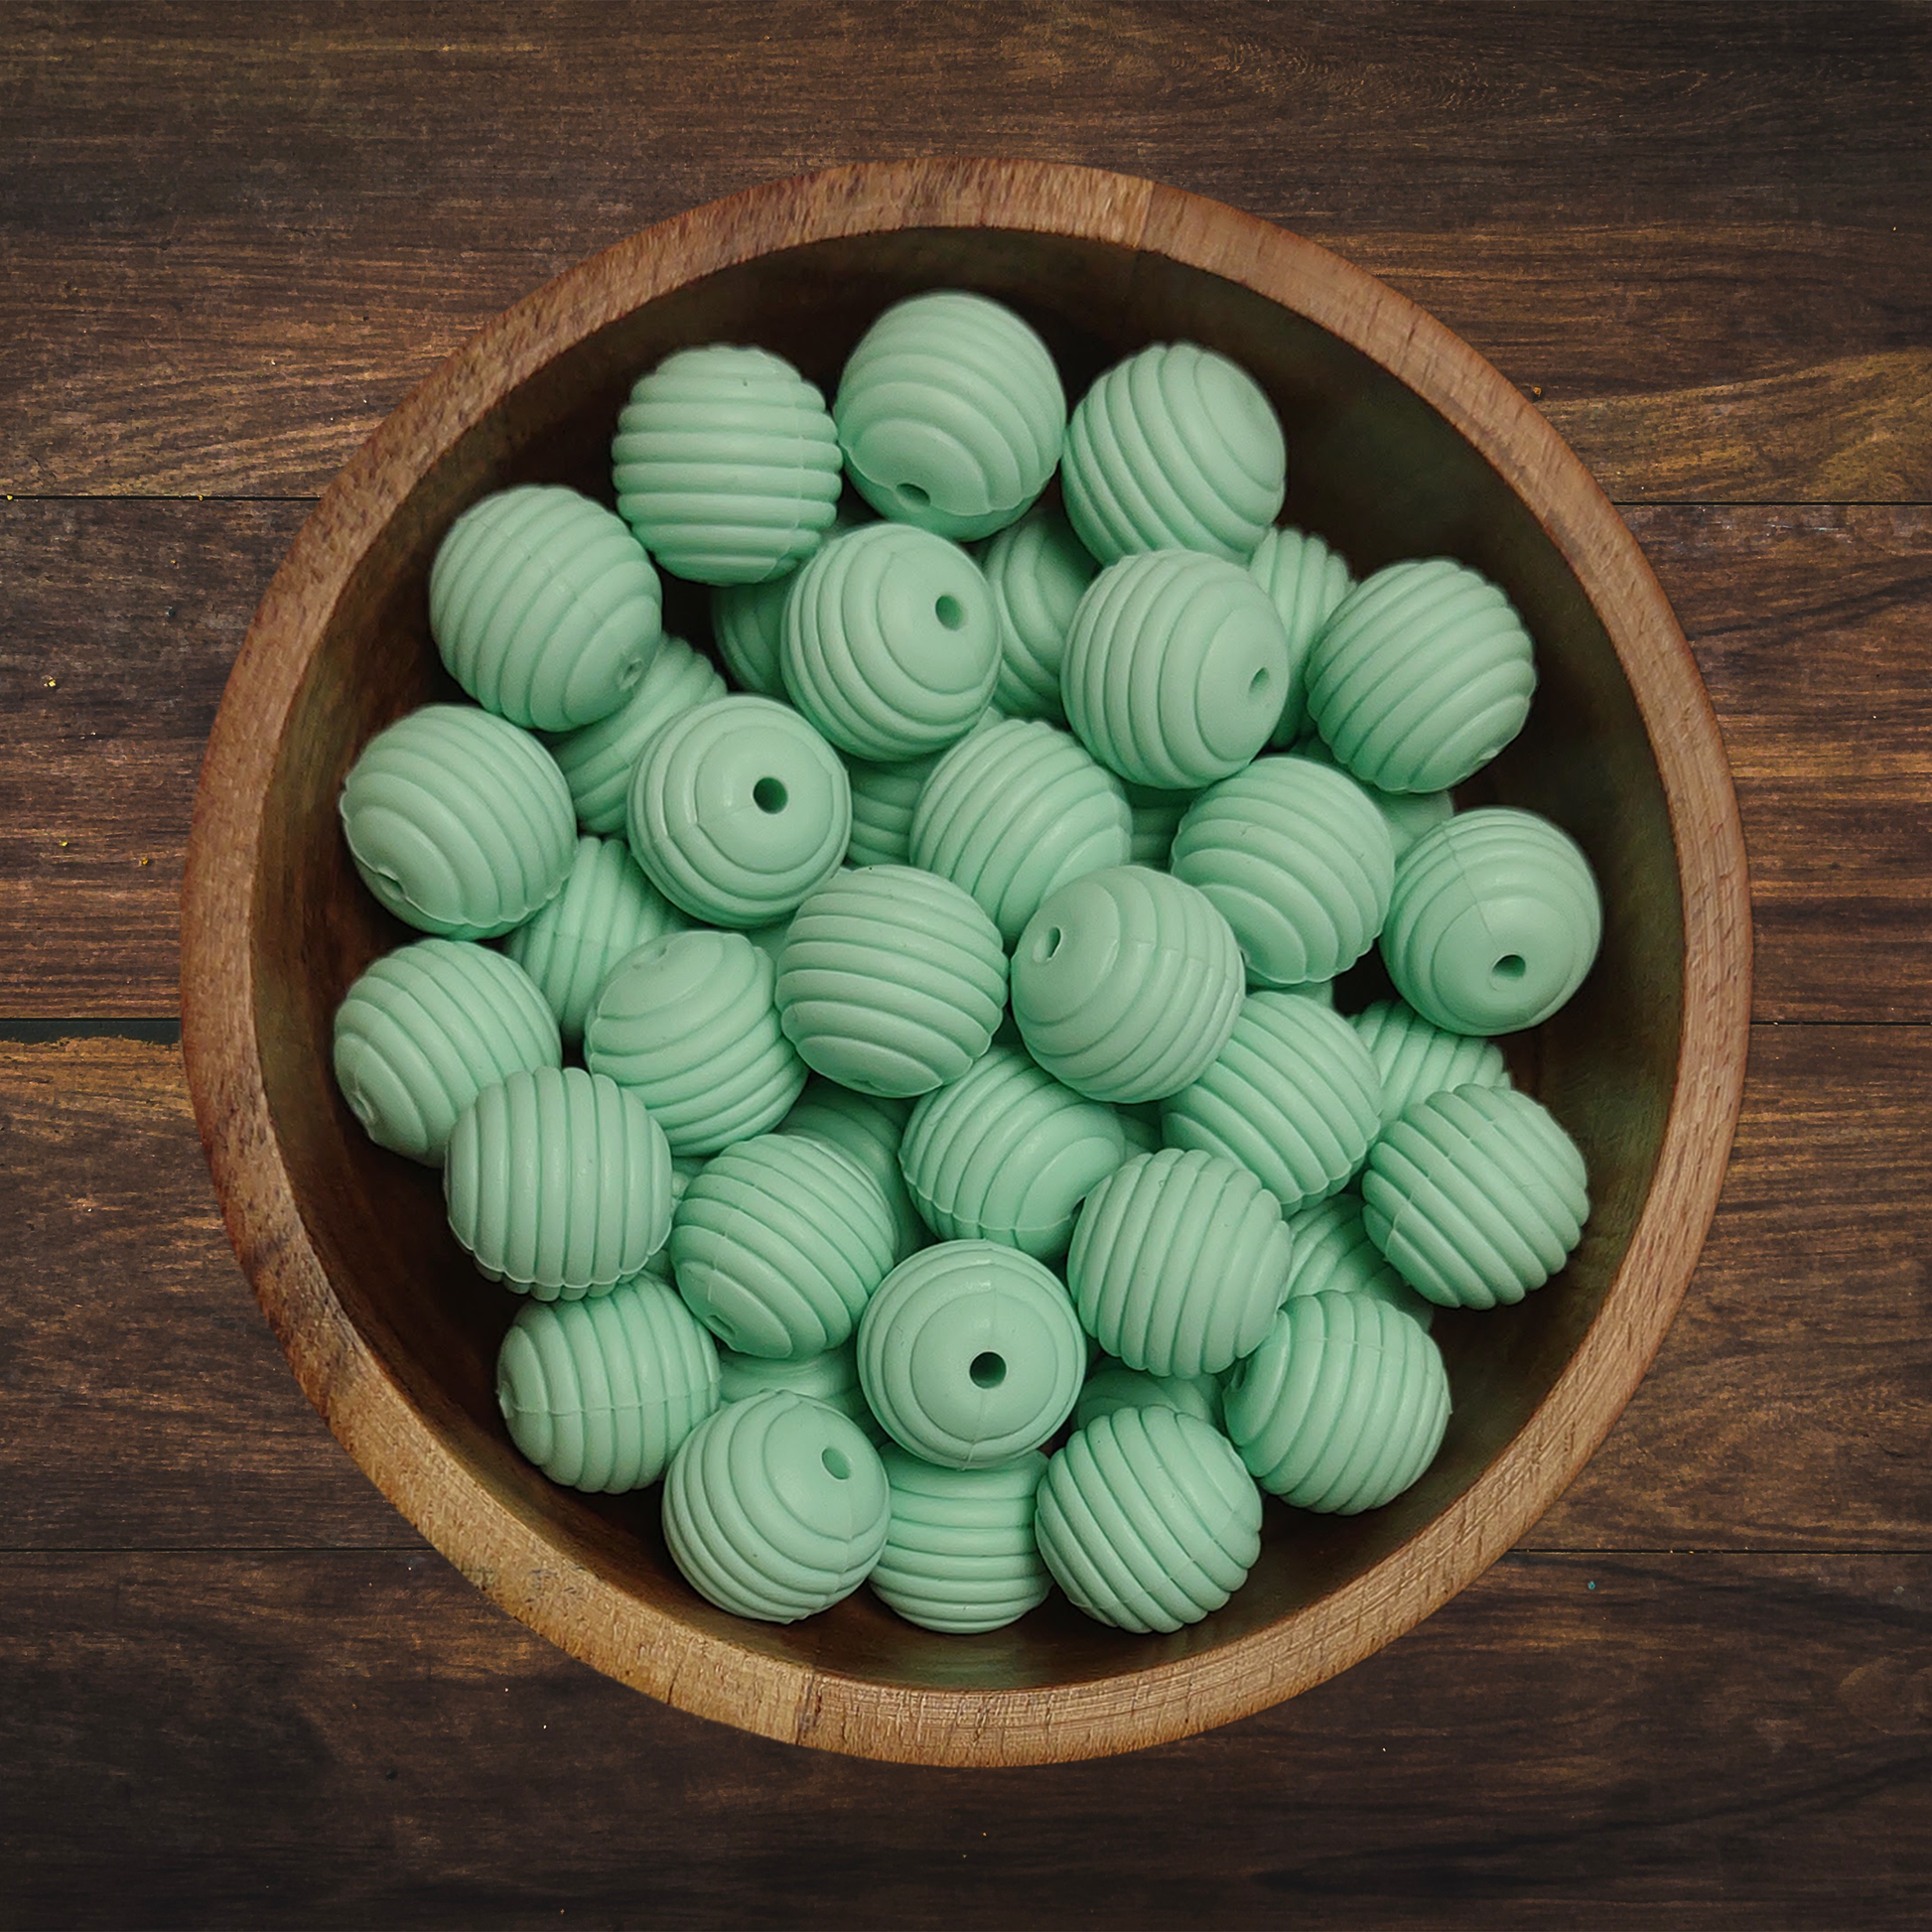 15mm Mix Colors Round Silicone Beads – MrBiteBabyStore